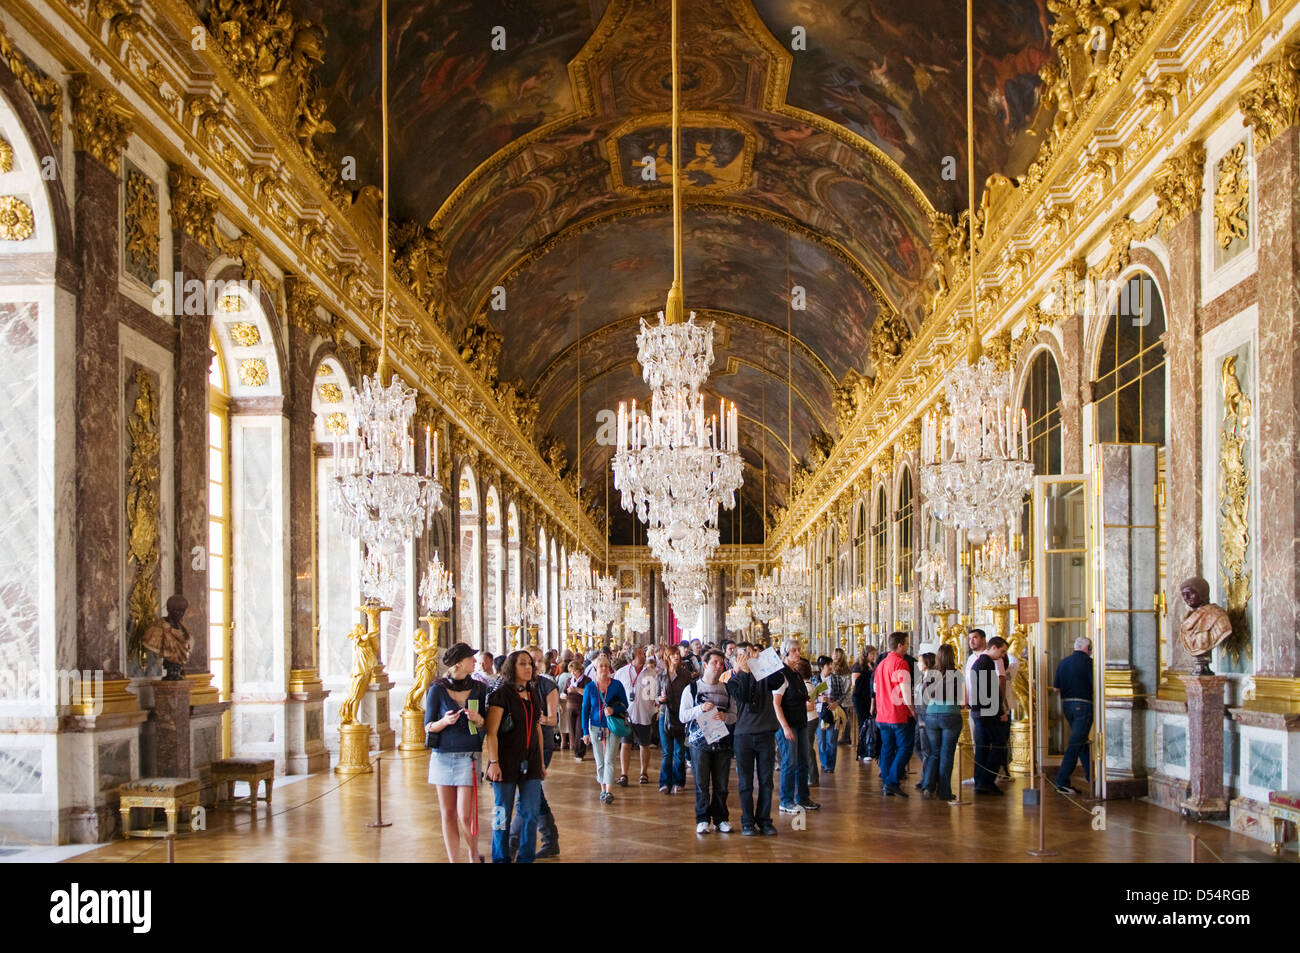 The Hall of Mirrors, Palais de Versailles, Paris, France Stock Photo